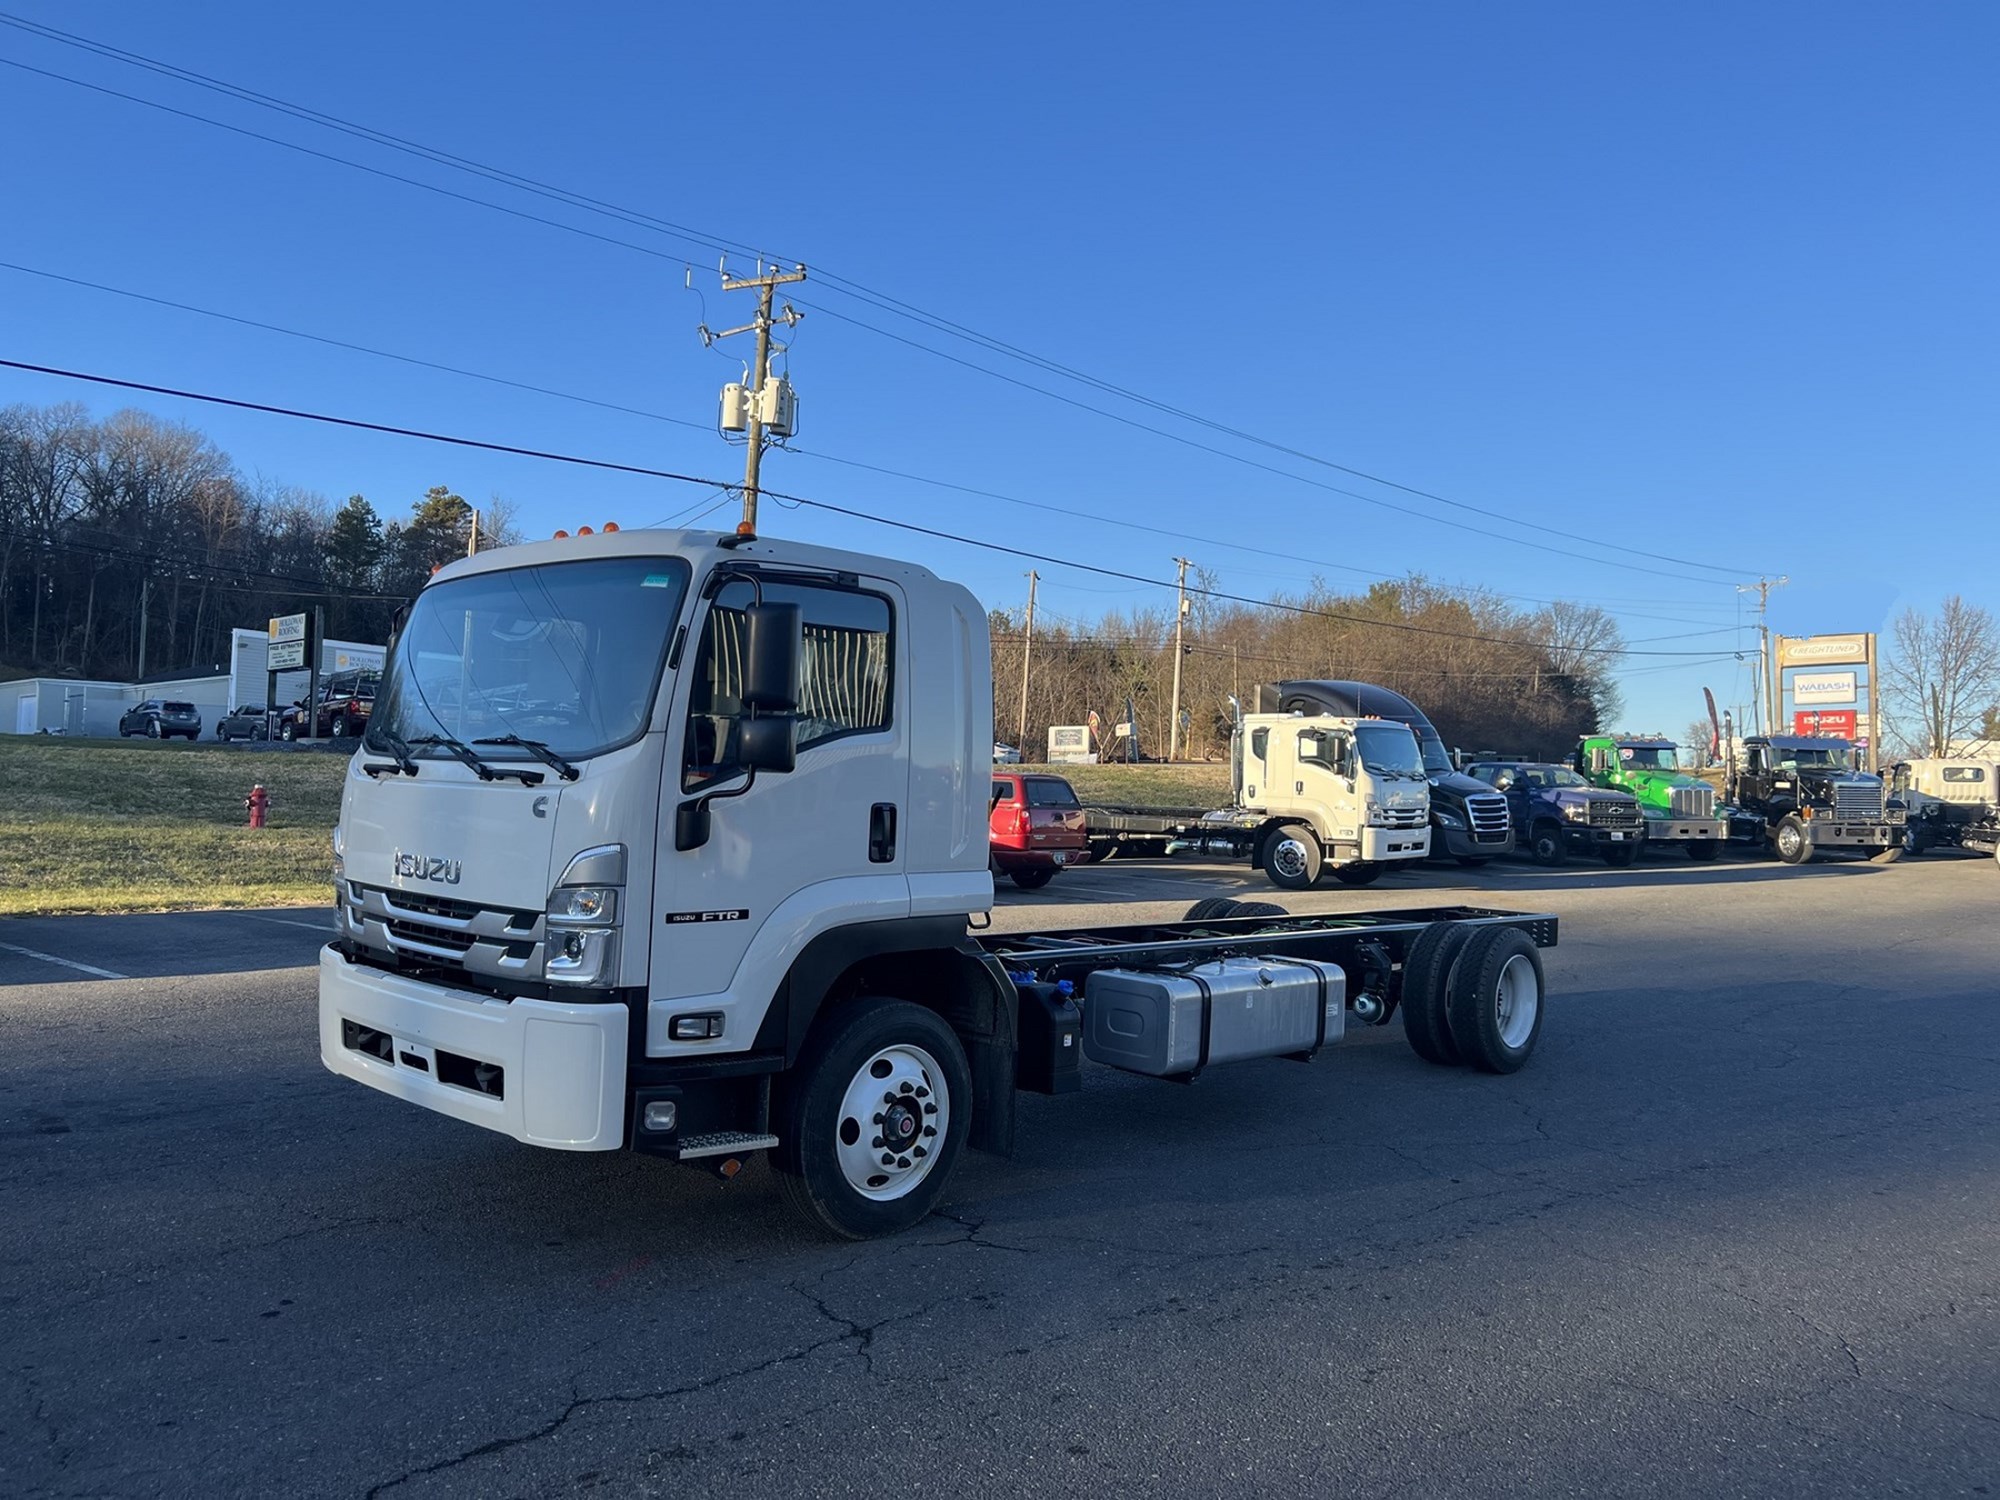 Isuzu Trucks Inventory - 1002021 01 - 1